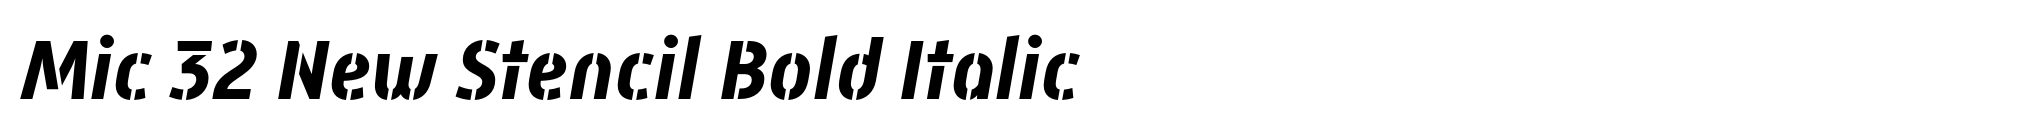 Mic 32 New Stencil Bold Italic image